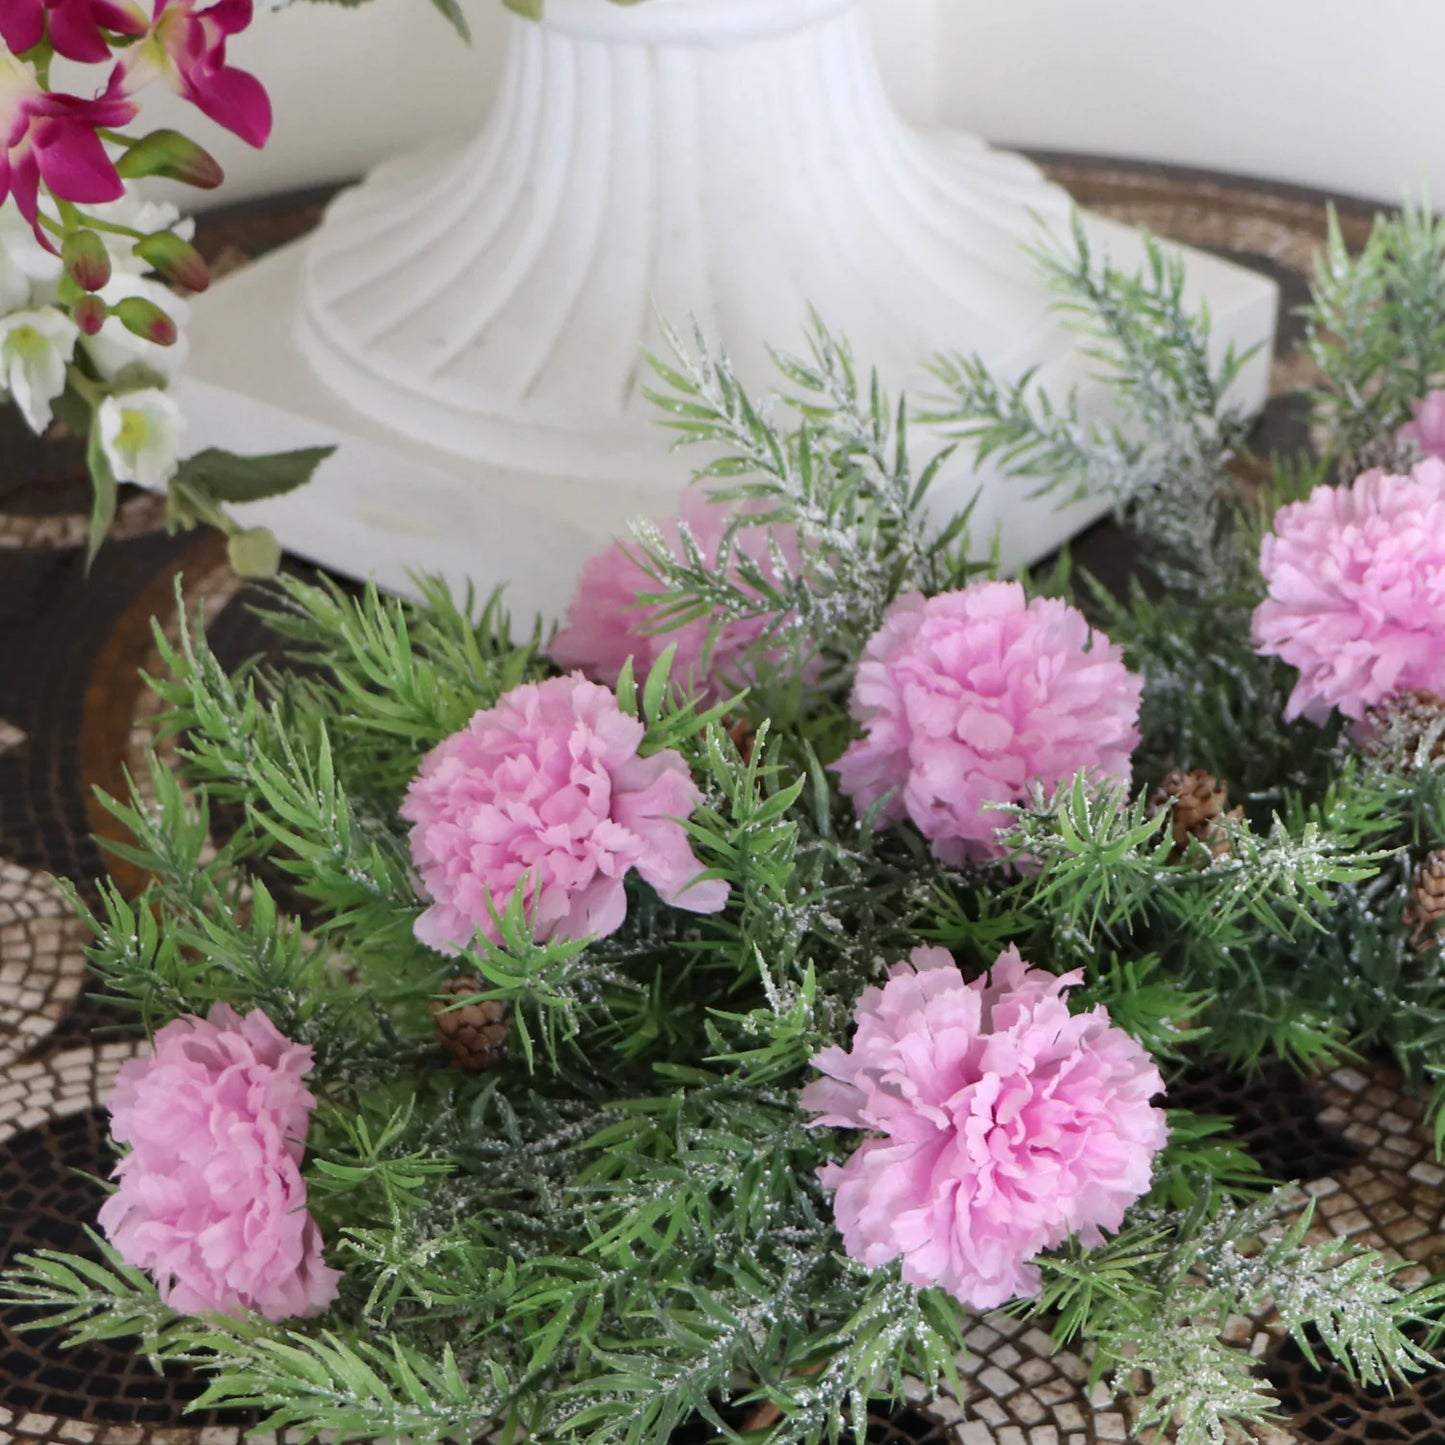 Lavender Serenade: Set of 100 Artificial Light Purple Carnation Picks - 7"x 3.5" | Exquisite Silk Flower Stems for Crafts, Decor, and Floral Arrangements